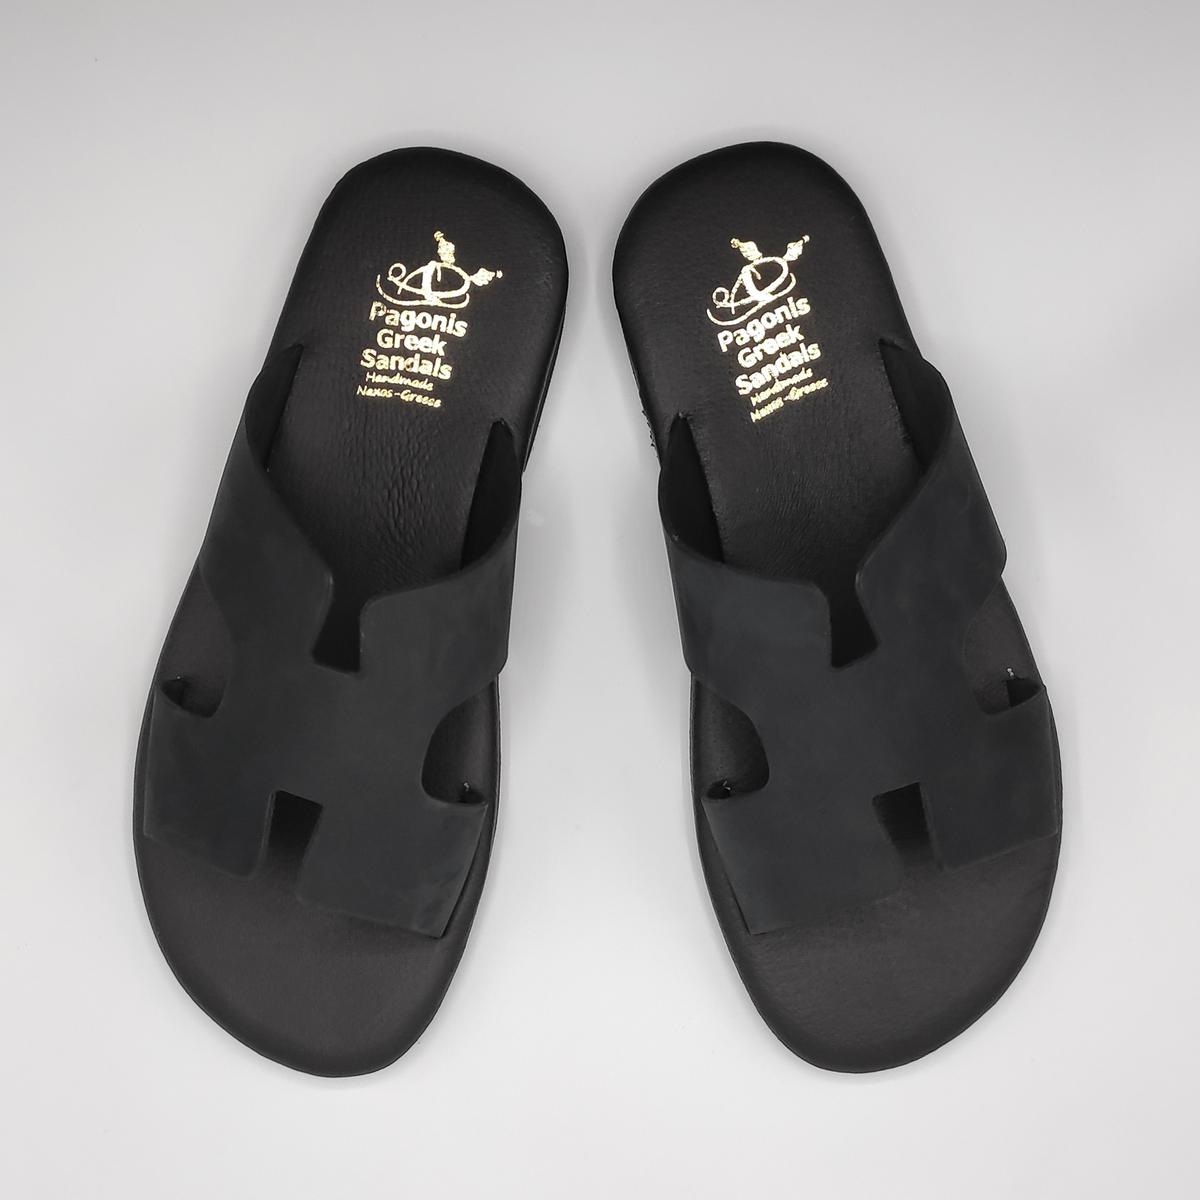 Hermes Men's Leather Sandals - Hermes Men Comfort - Leather Sandals |  Pagonis Greek Sandals